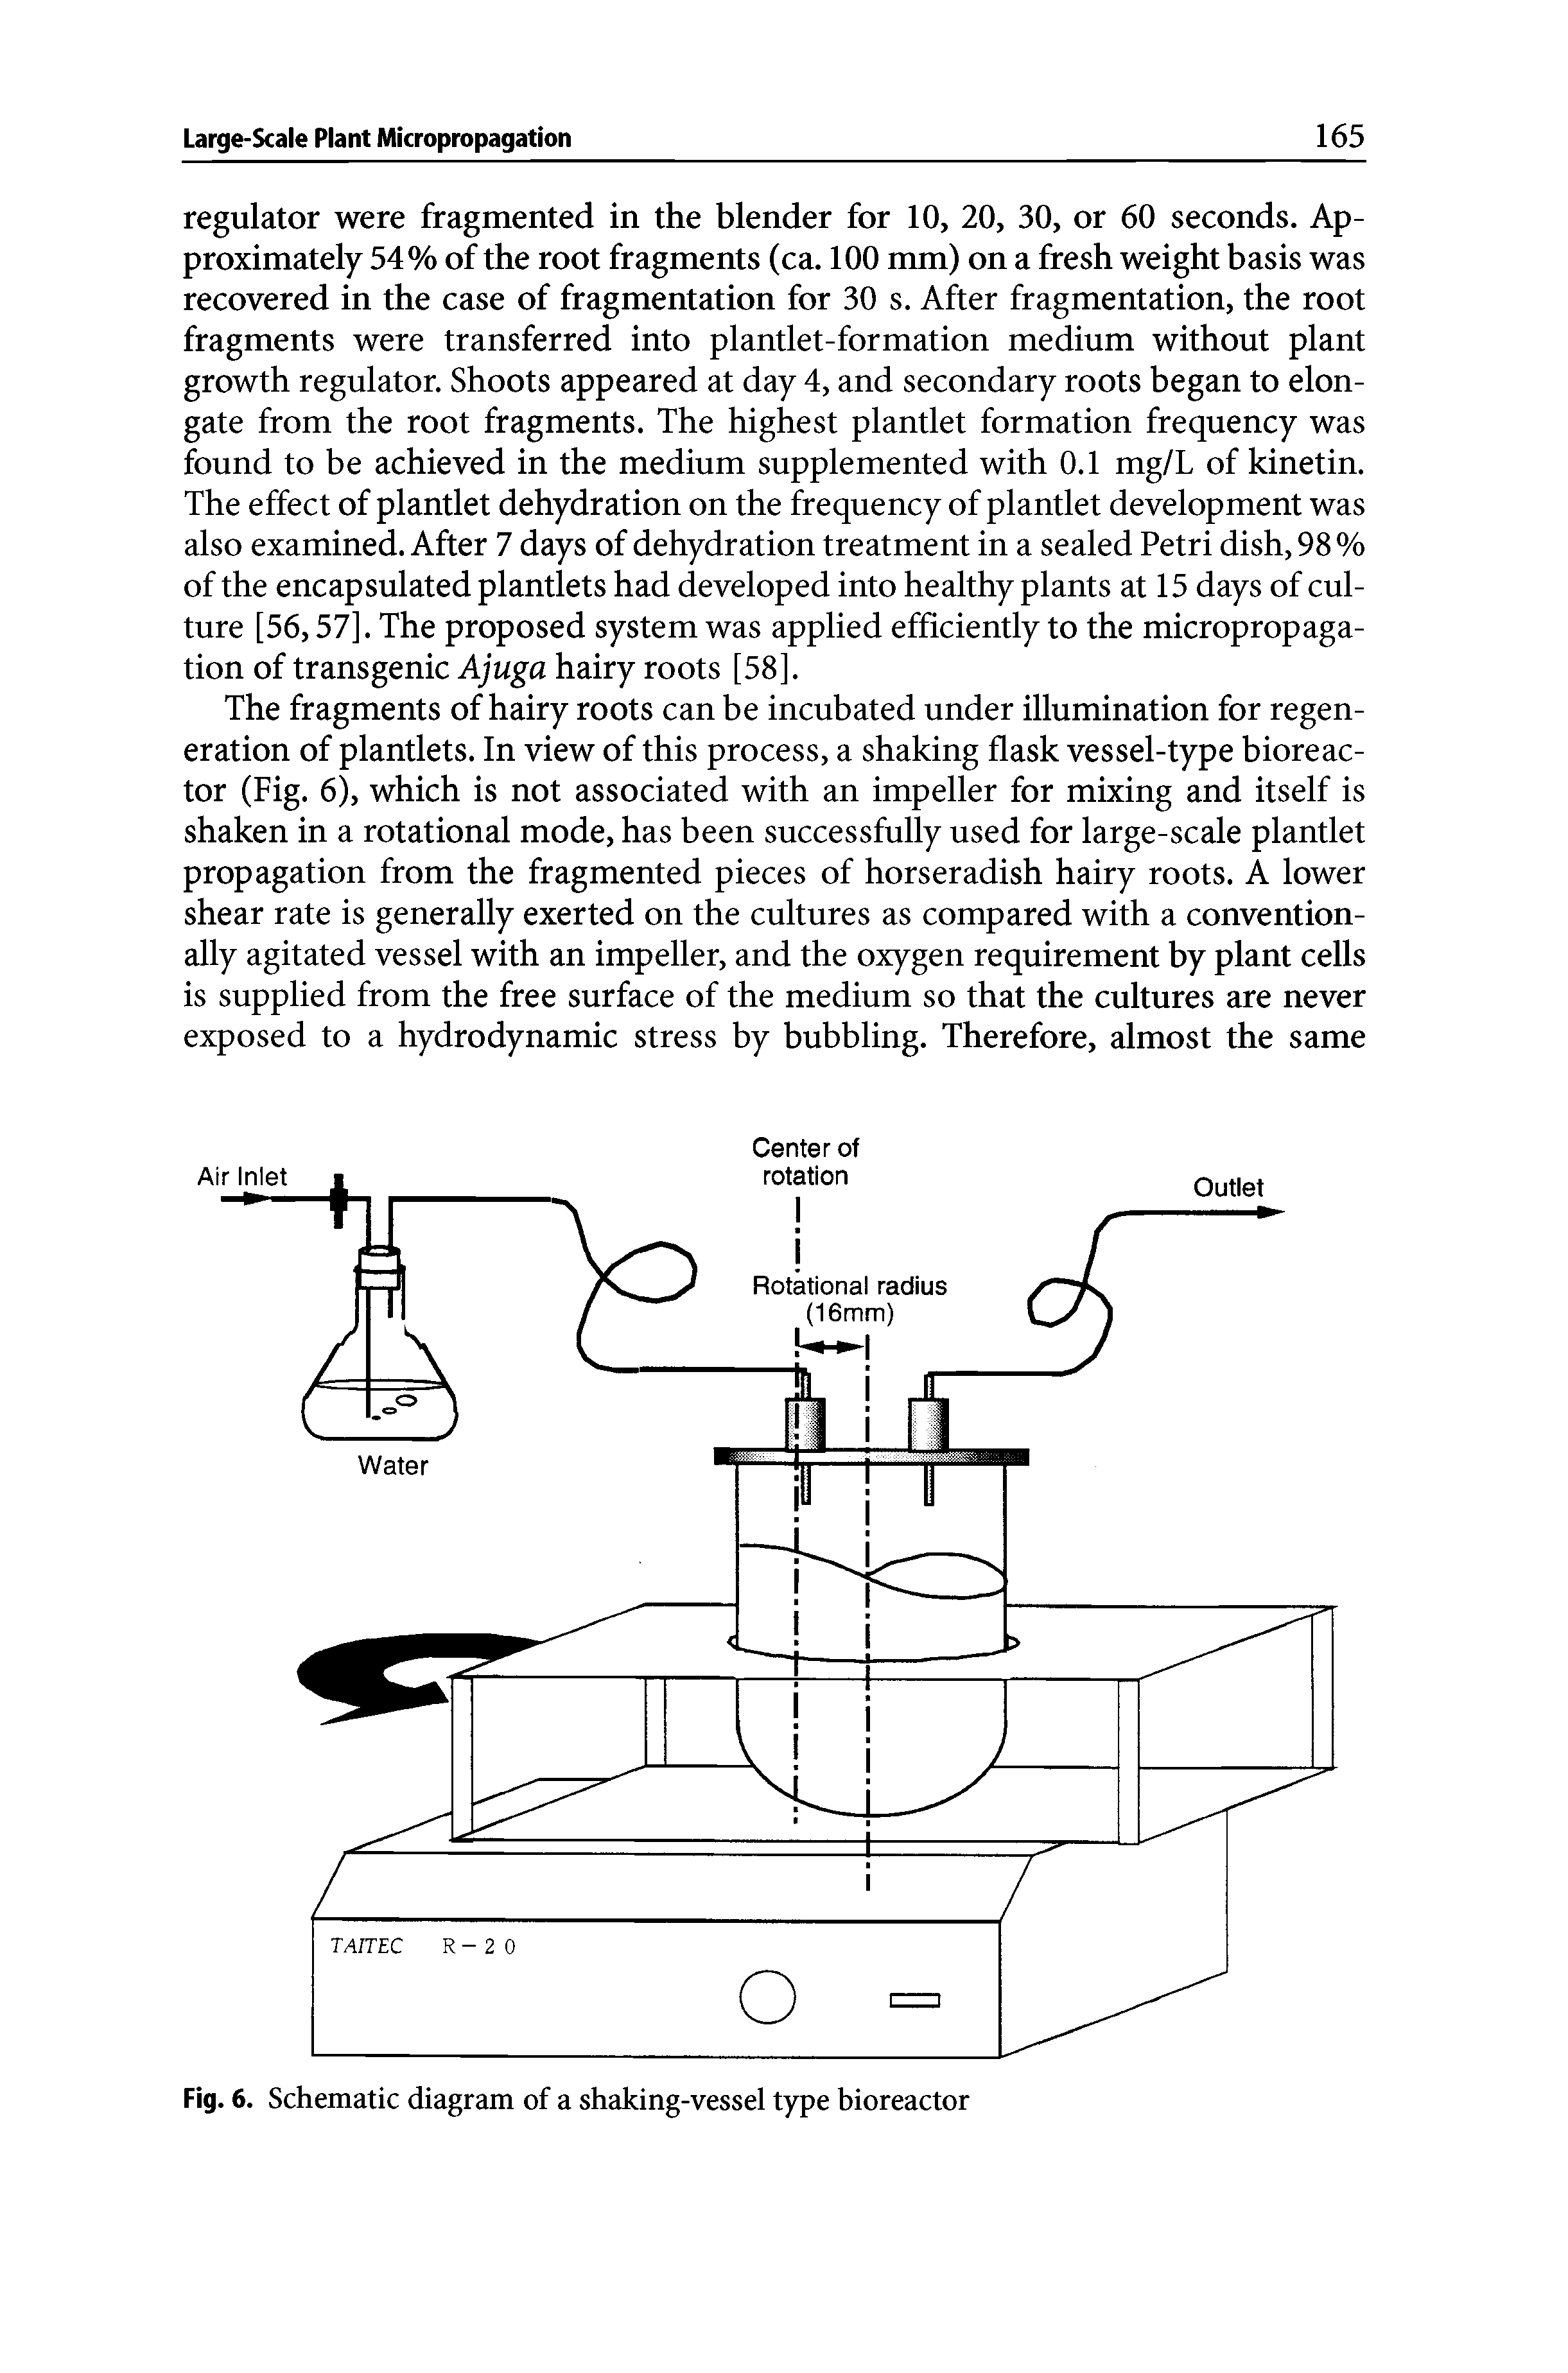 Fig. 6. Schematic diagram of a shaking-vessel type bioreactor...